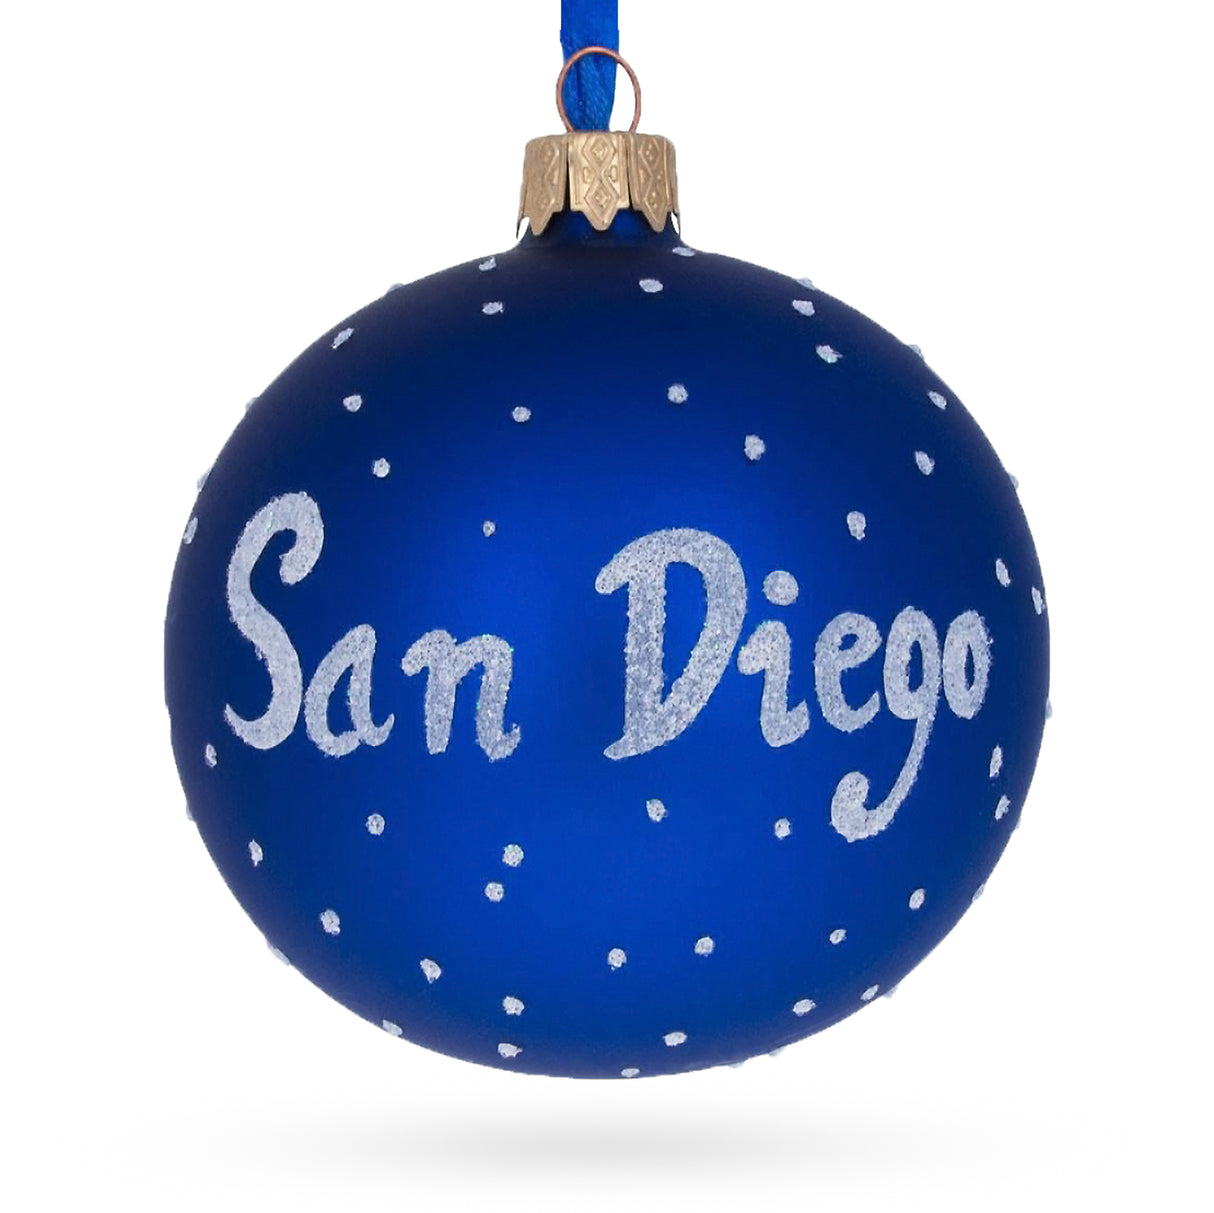 Buy Christmas Ornaments > Travel > North America > USA > California > San Diego by BestPysanky Online Gift Ship